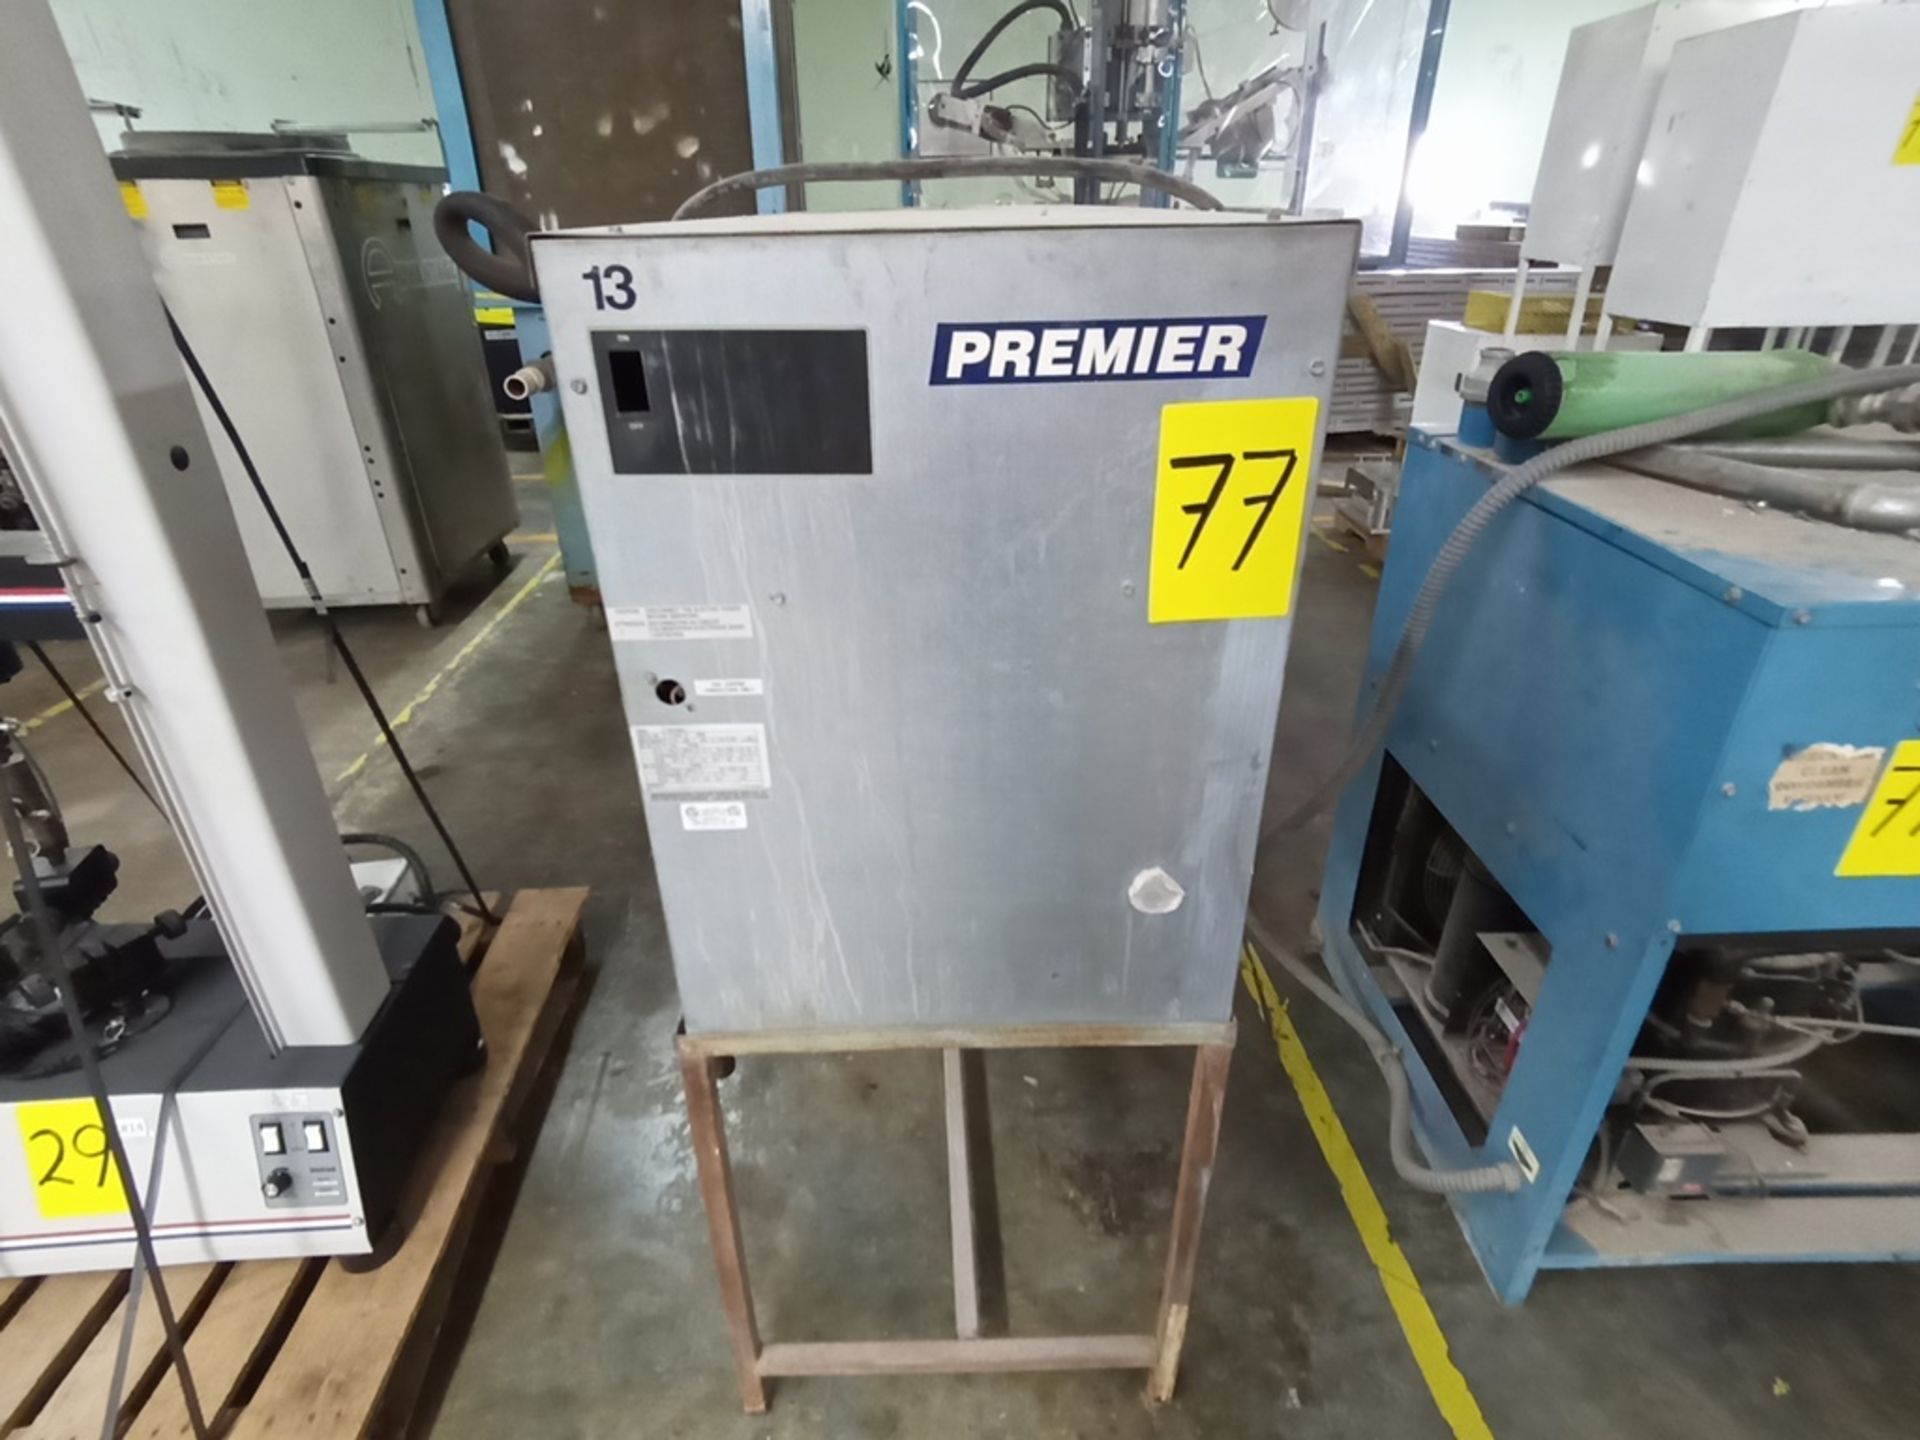 Compressed air dryer for hydraulic system model PRA150A2, Serial No. 111233-2 230V/1PH, Compressed